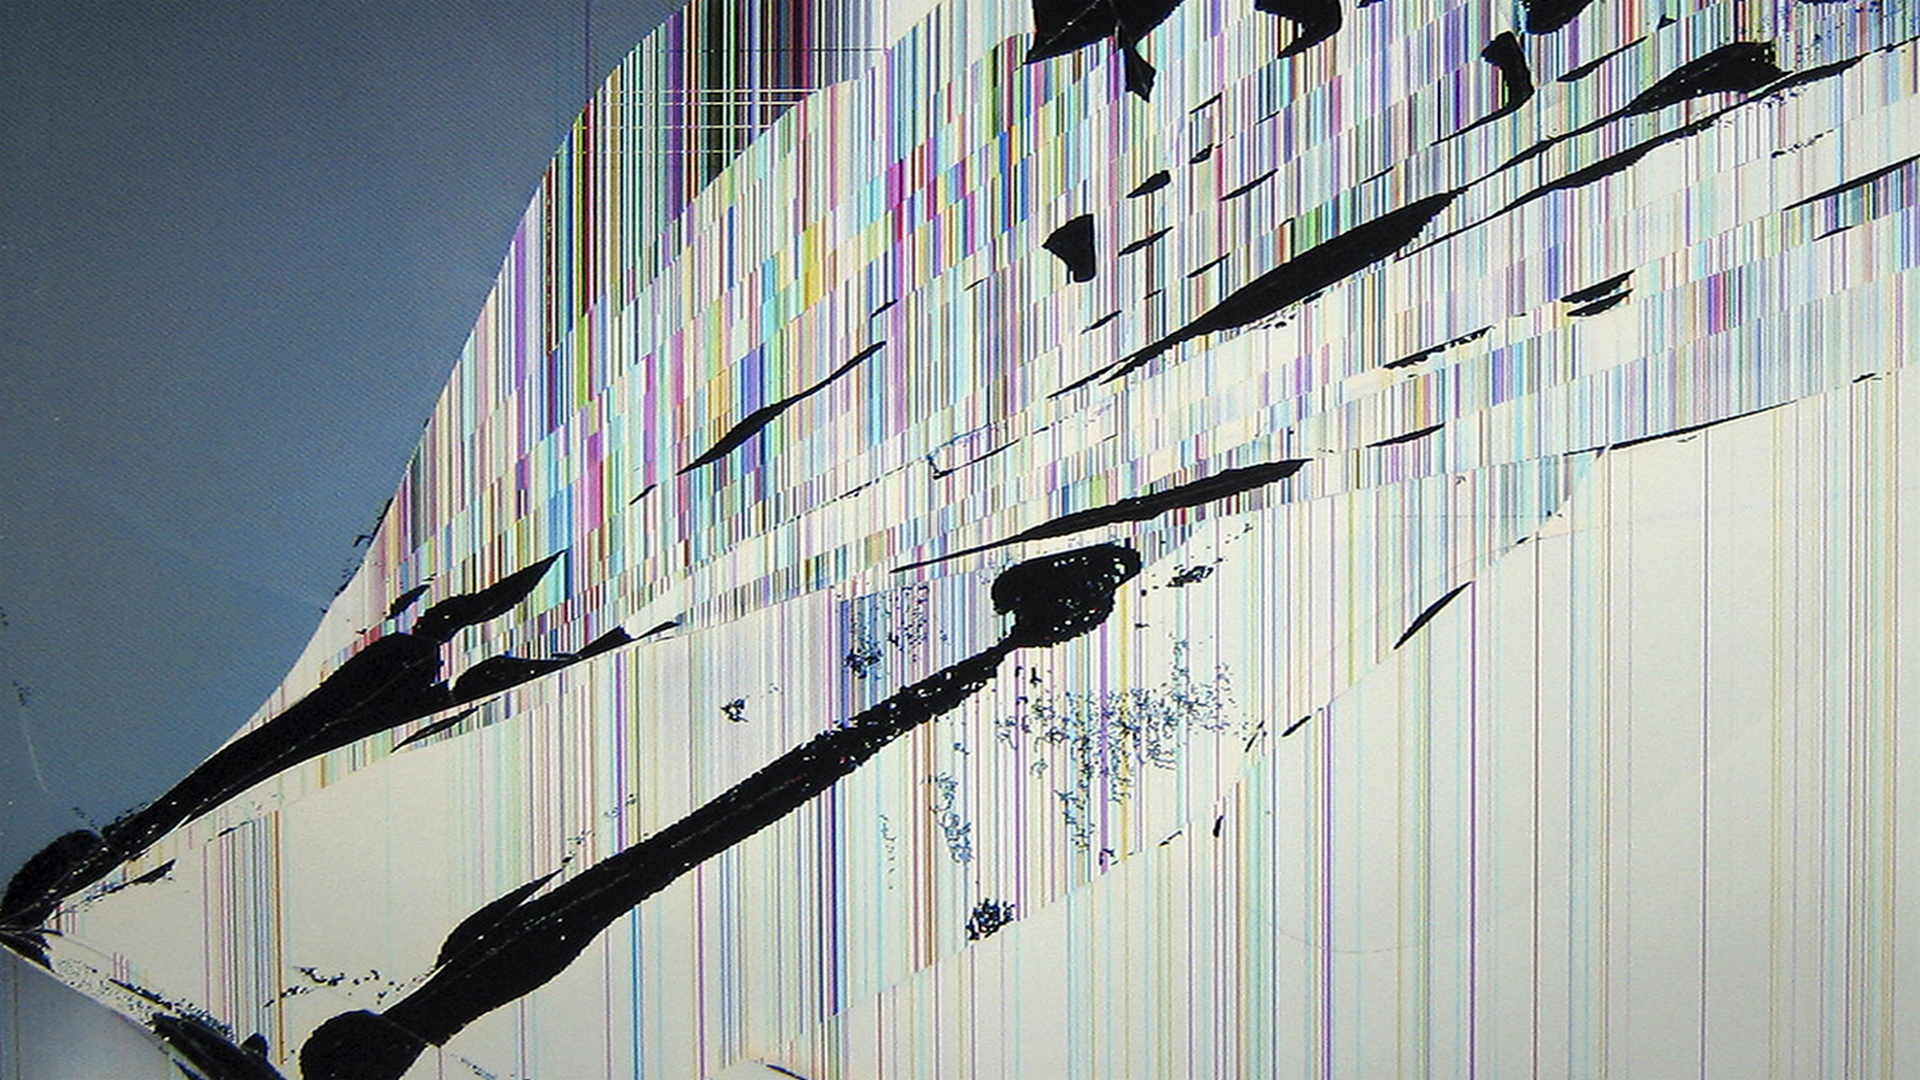 Broken Screen Wallpaper Prank For iPhone iPod Windows and Mac Laptop